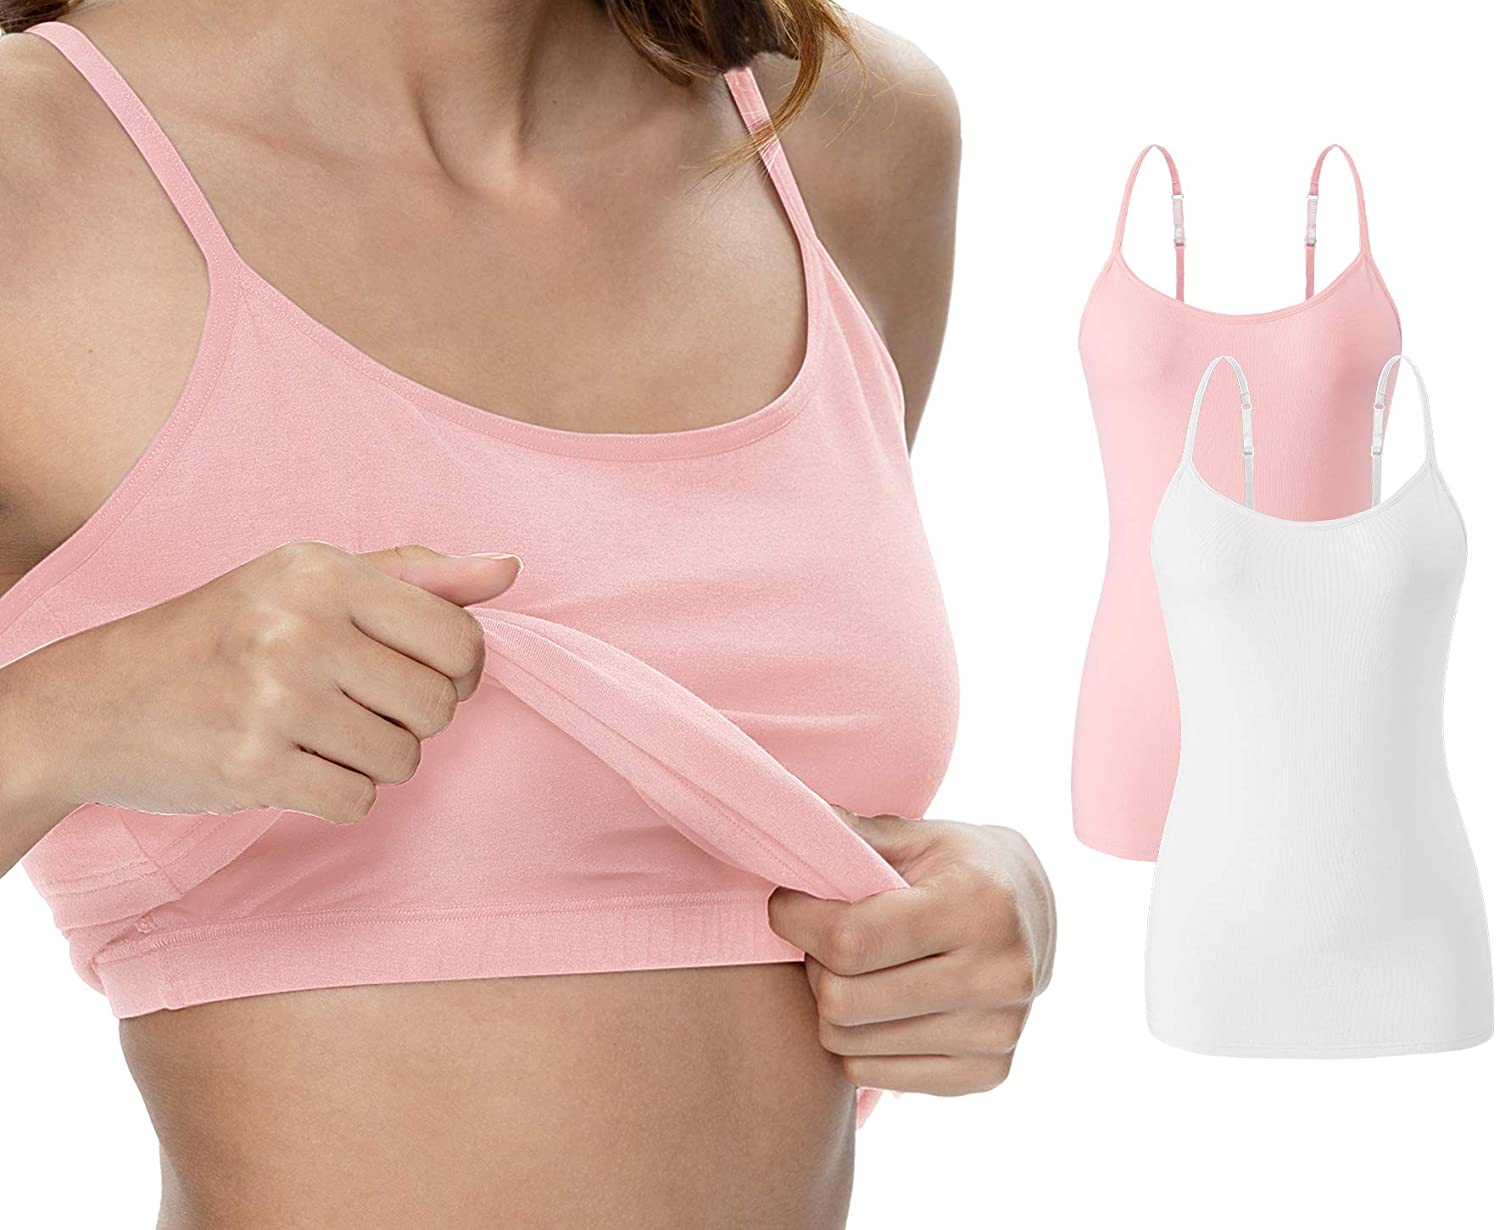 Vislivin Womens Cotton Camisole Adjustable Strap Tank Tops with Shelf Bra Stretch Undershirts